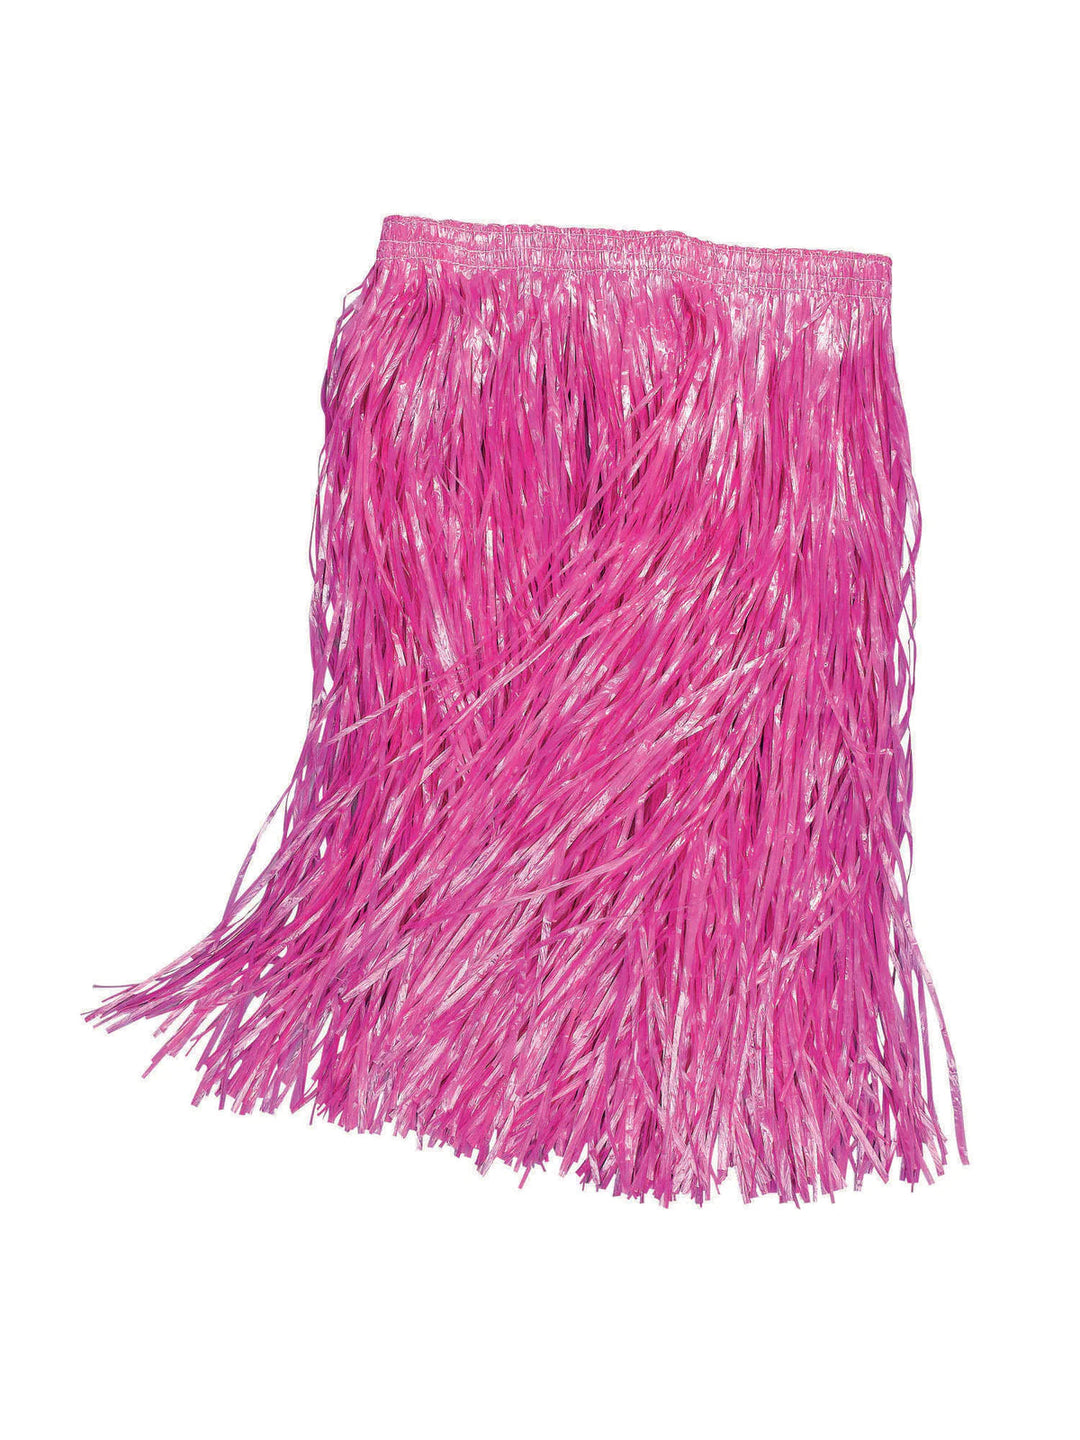 Pink Grass Skirt 55cm Hawaiian Costume Accessory_1